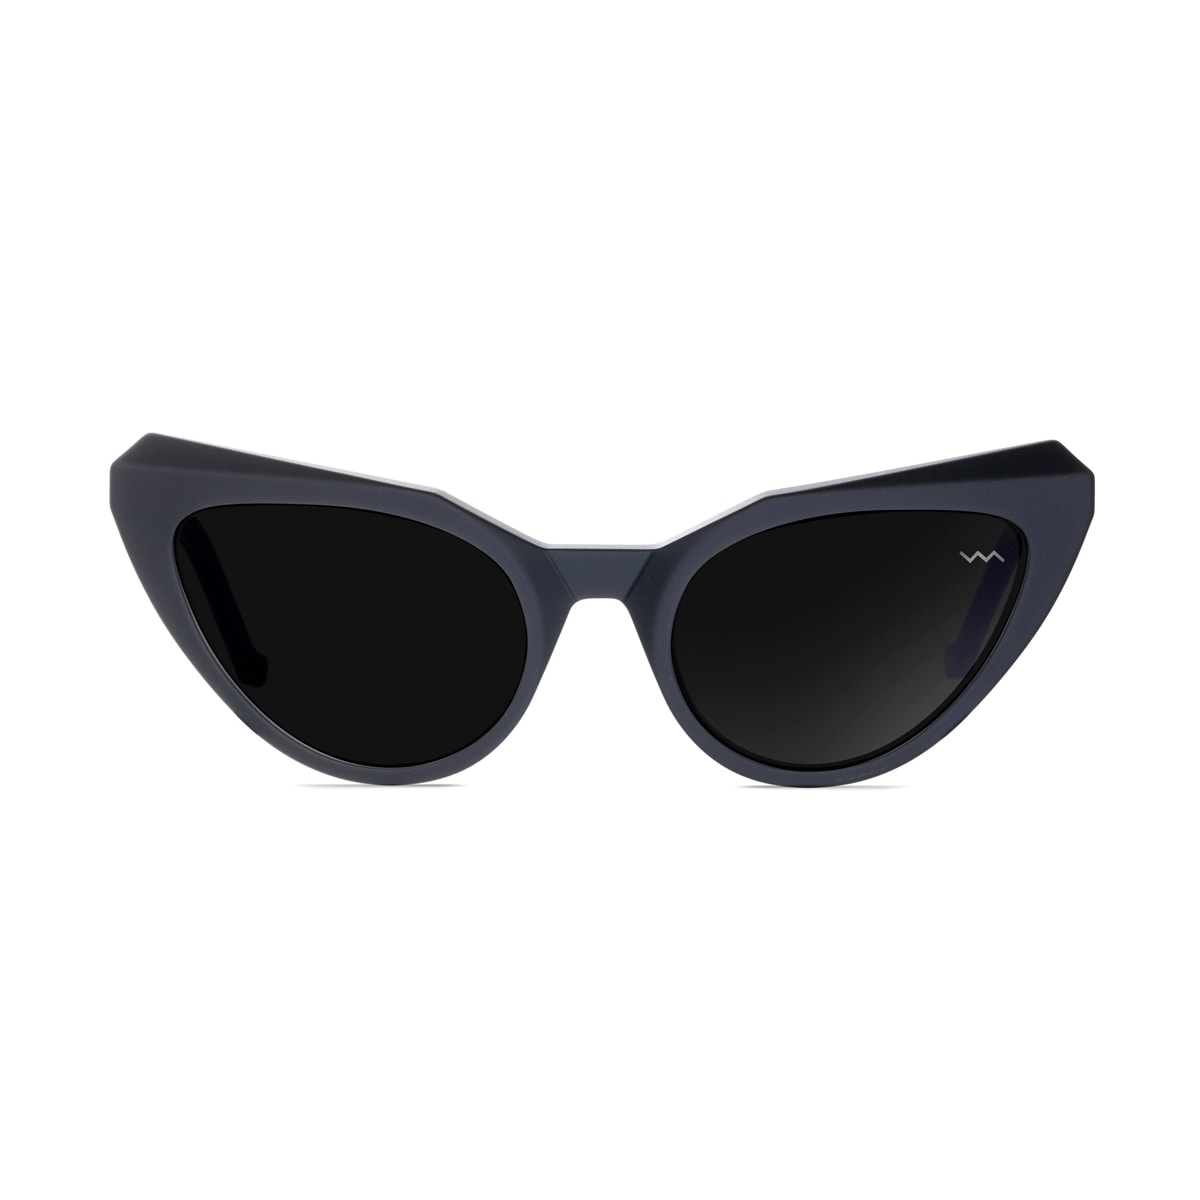 Bl0028 Black Label Black Matte Sunglasses